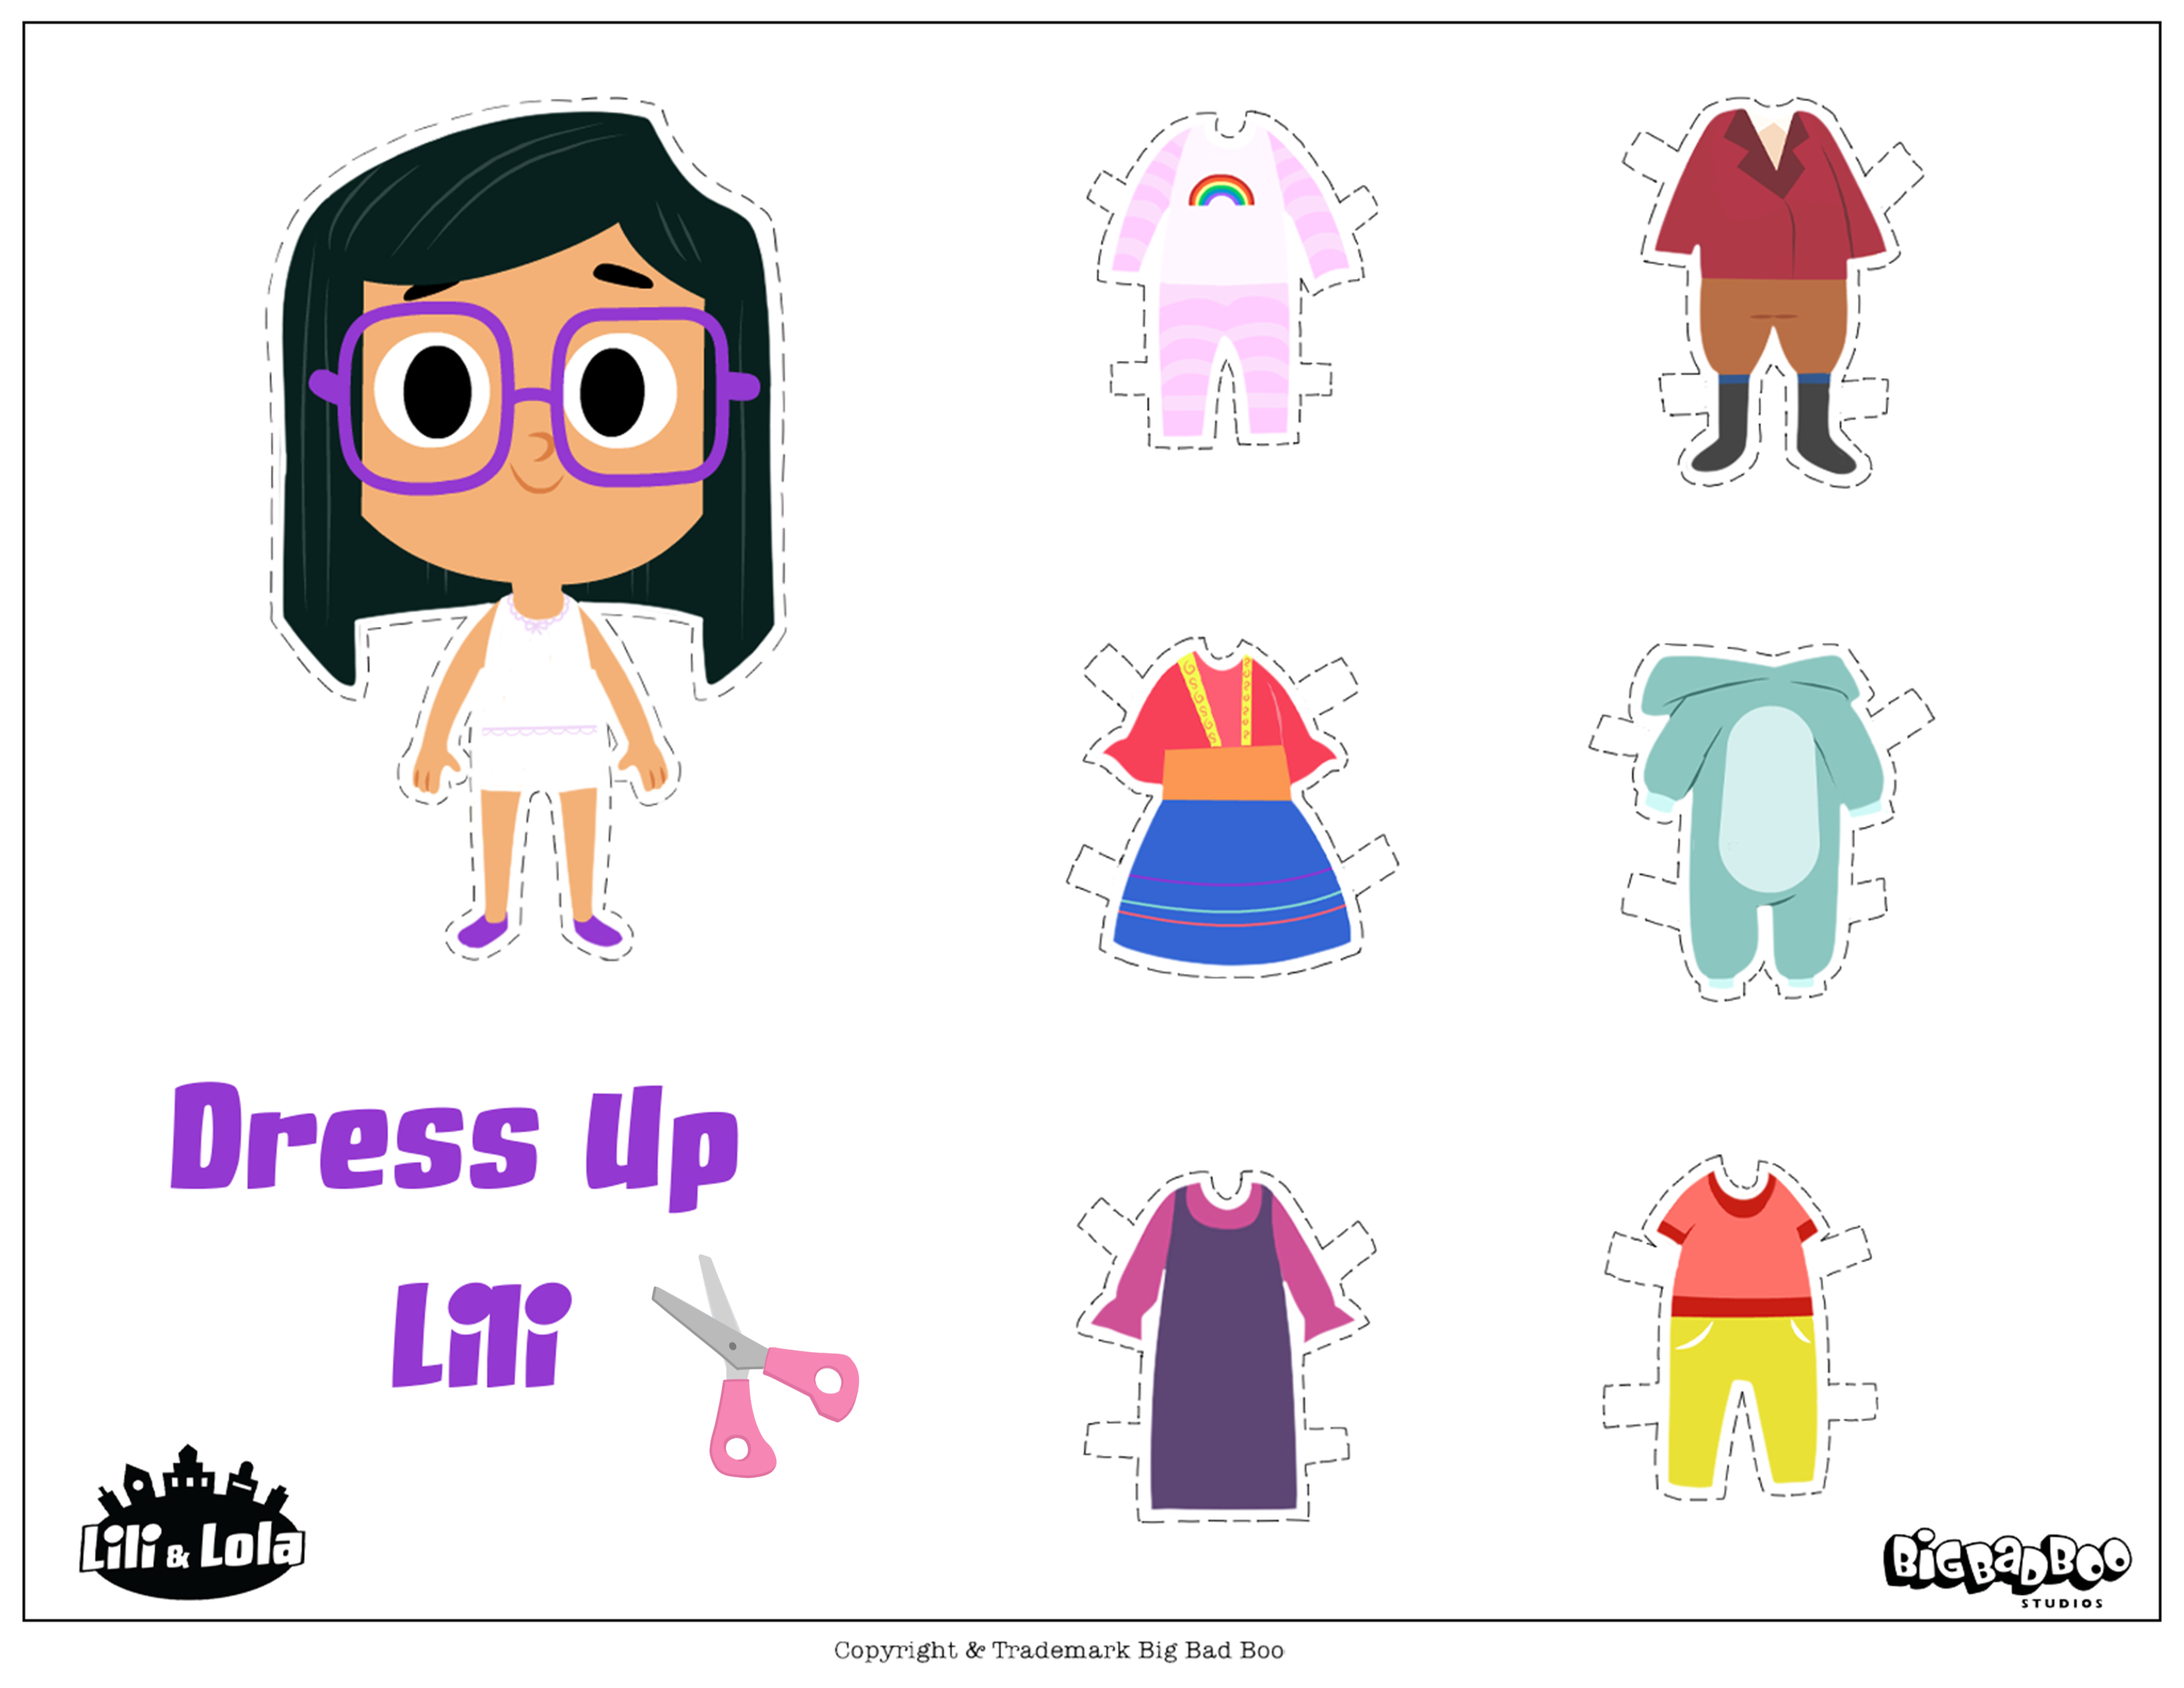 Dress up Lili